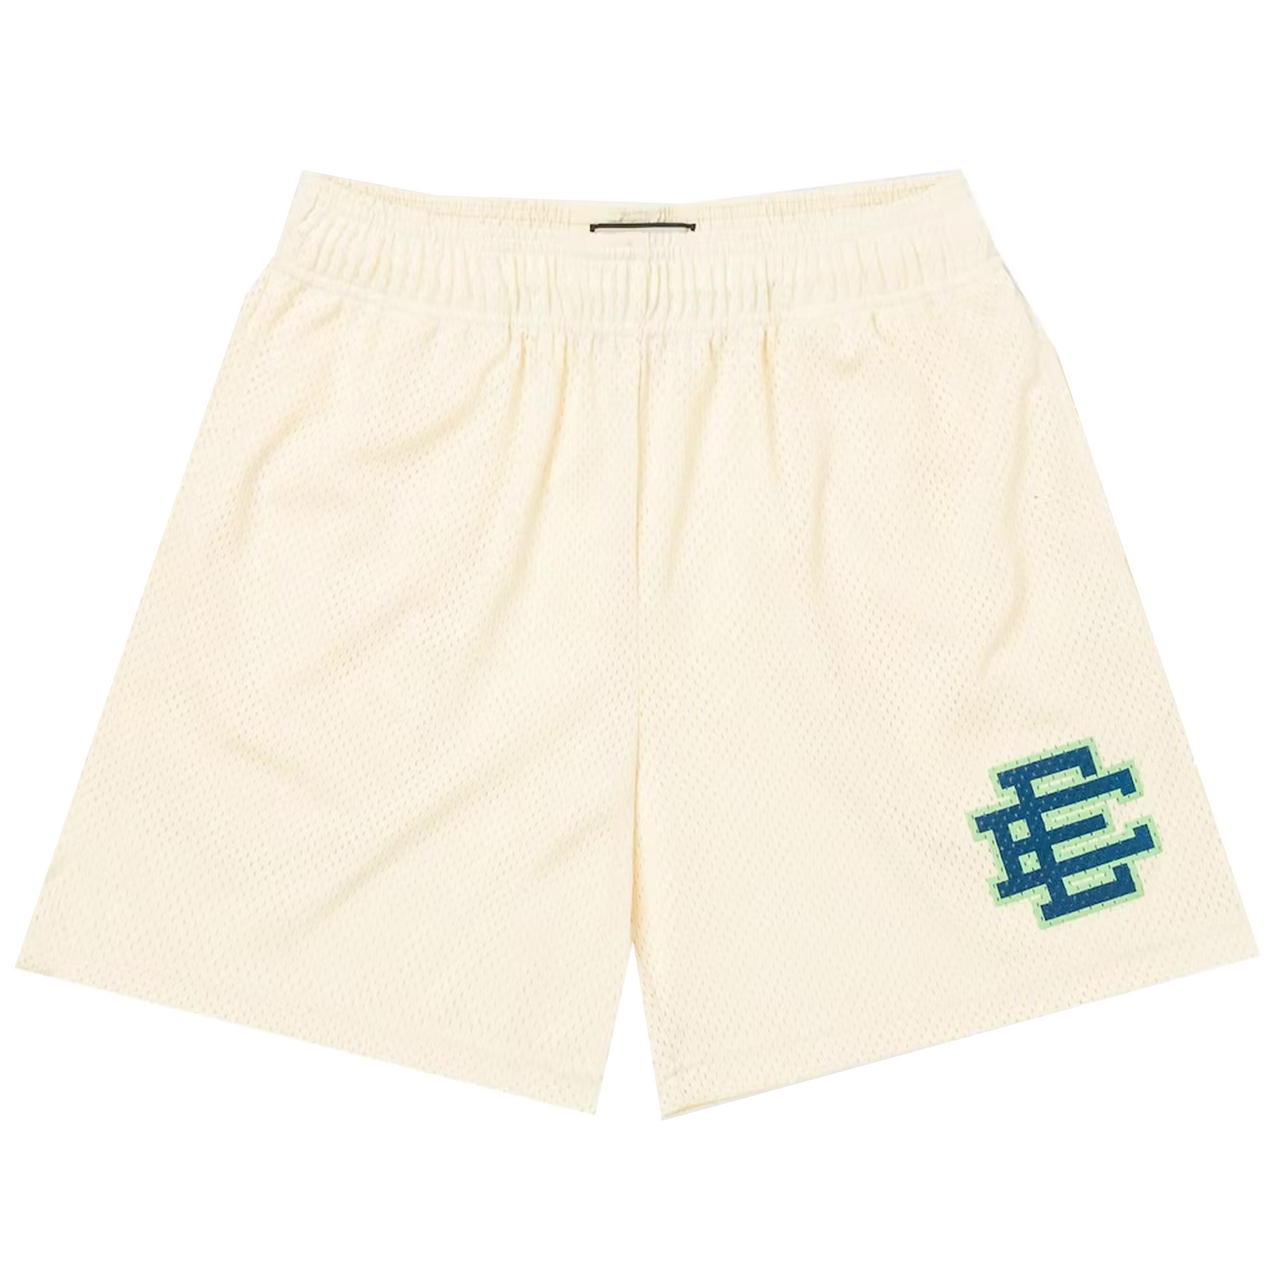 Eric Emanuel Basic Shorts Antique White Blue Green